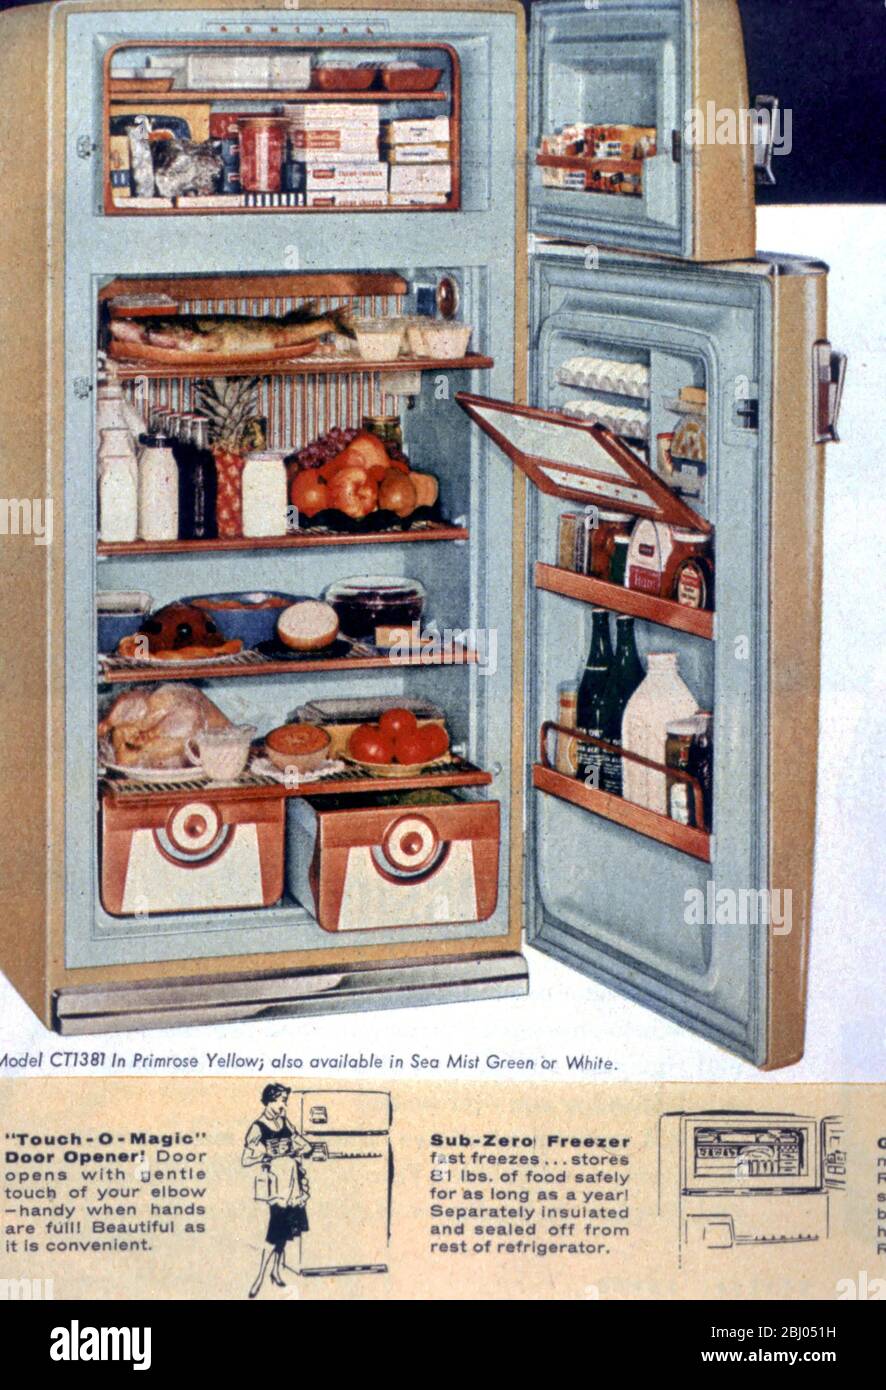 USA - 1950s style fridge advertisement - Stock Photo